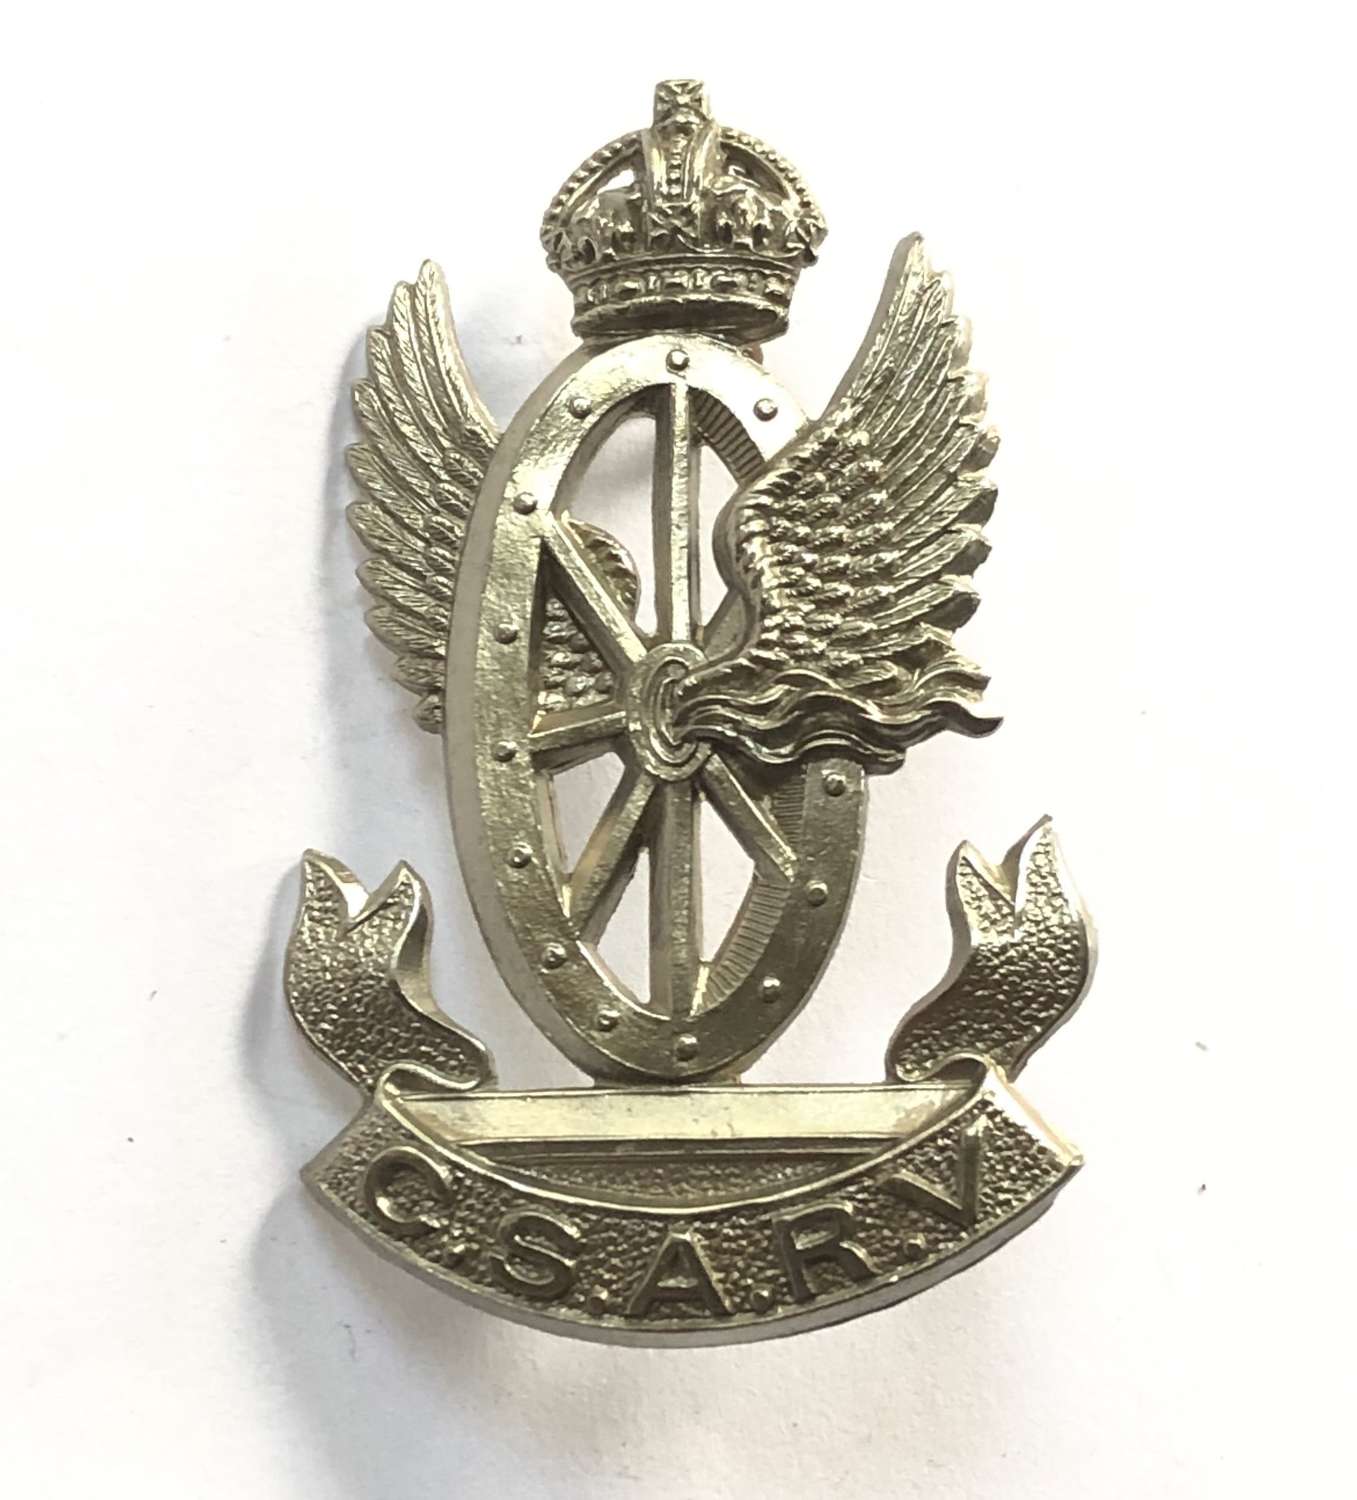 Central South African Railway Volunteers cap badge c1902-13